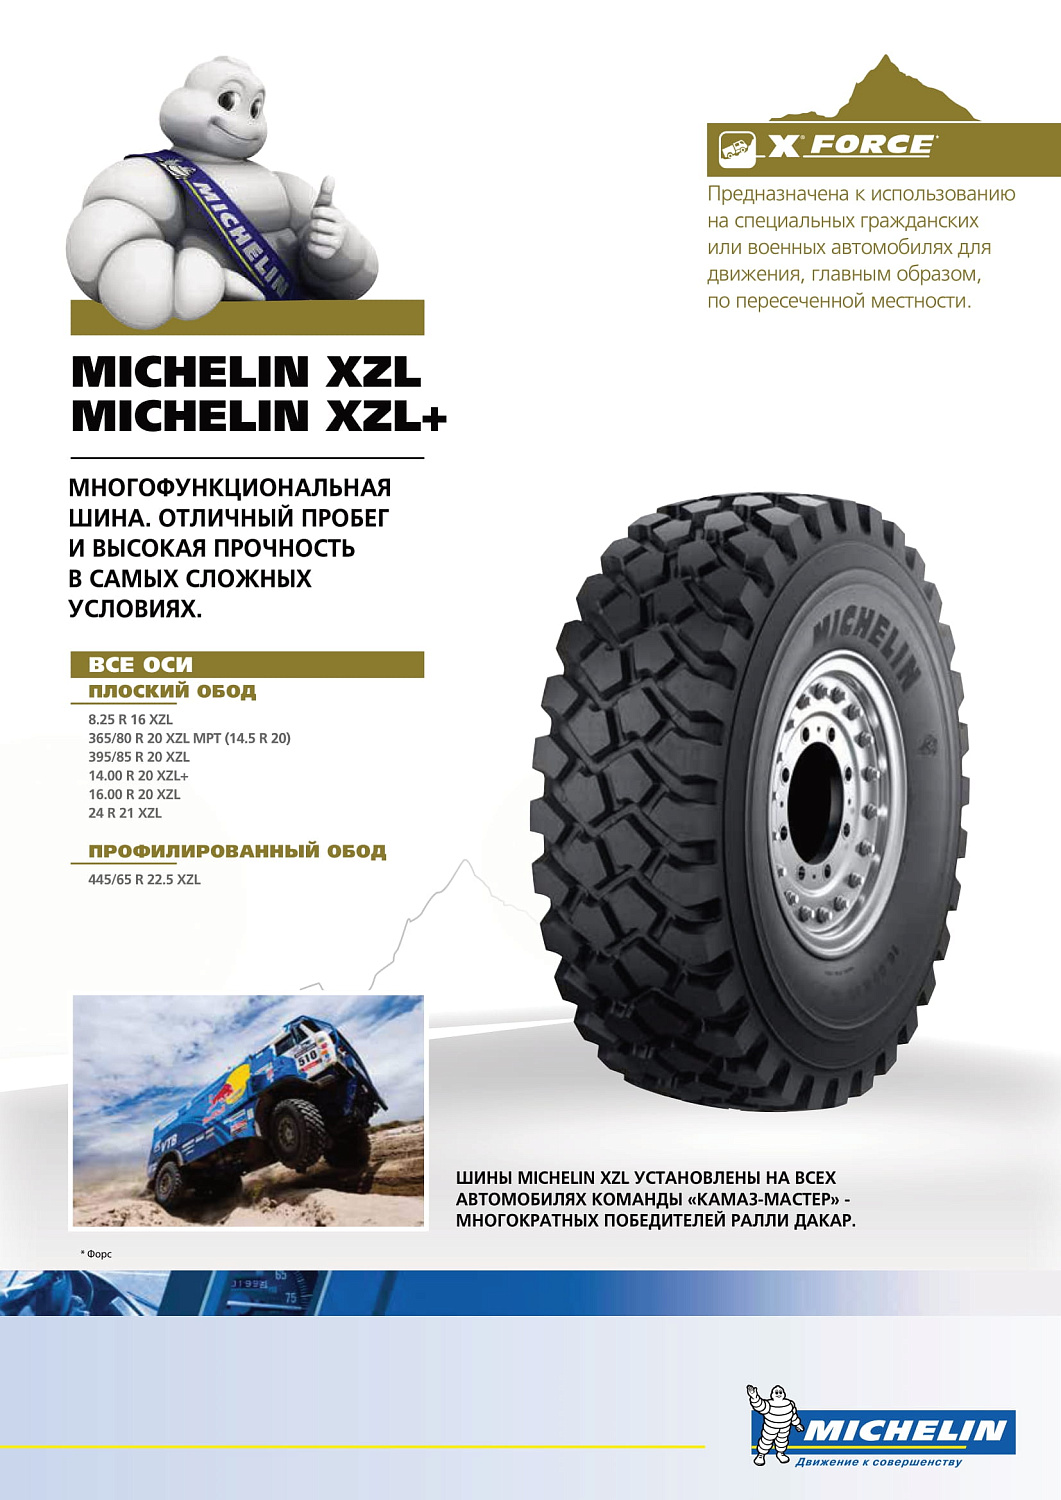 Michelin XZL 16.00R20